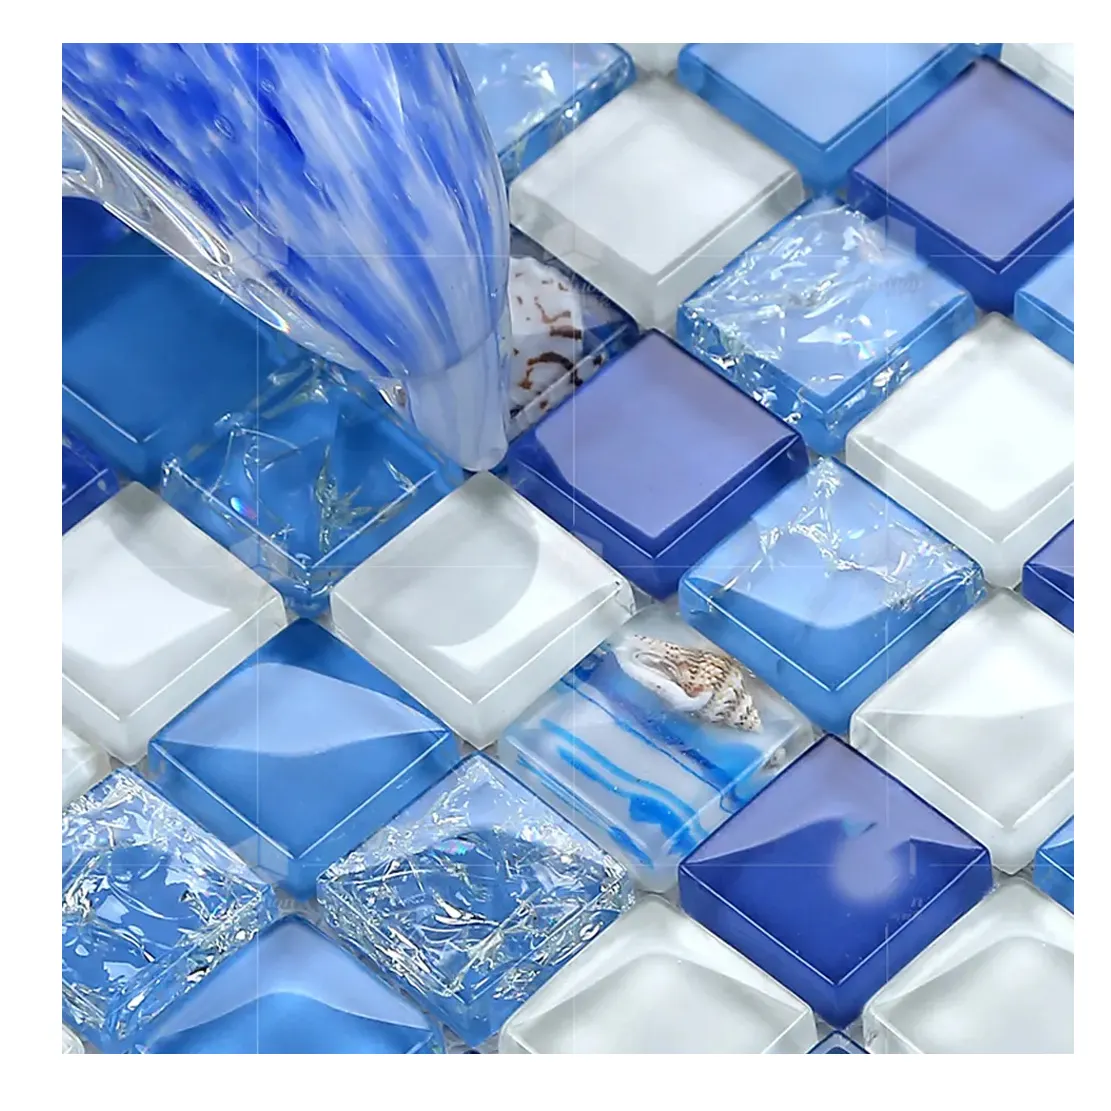 advanced technology kitchen backsplash swimming pool glass tile mosaic blue glass wall tiles shapes